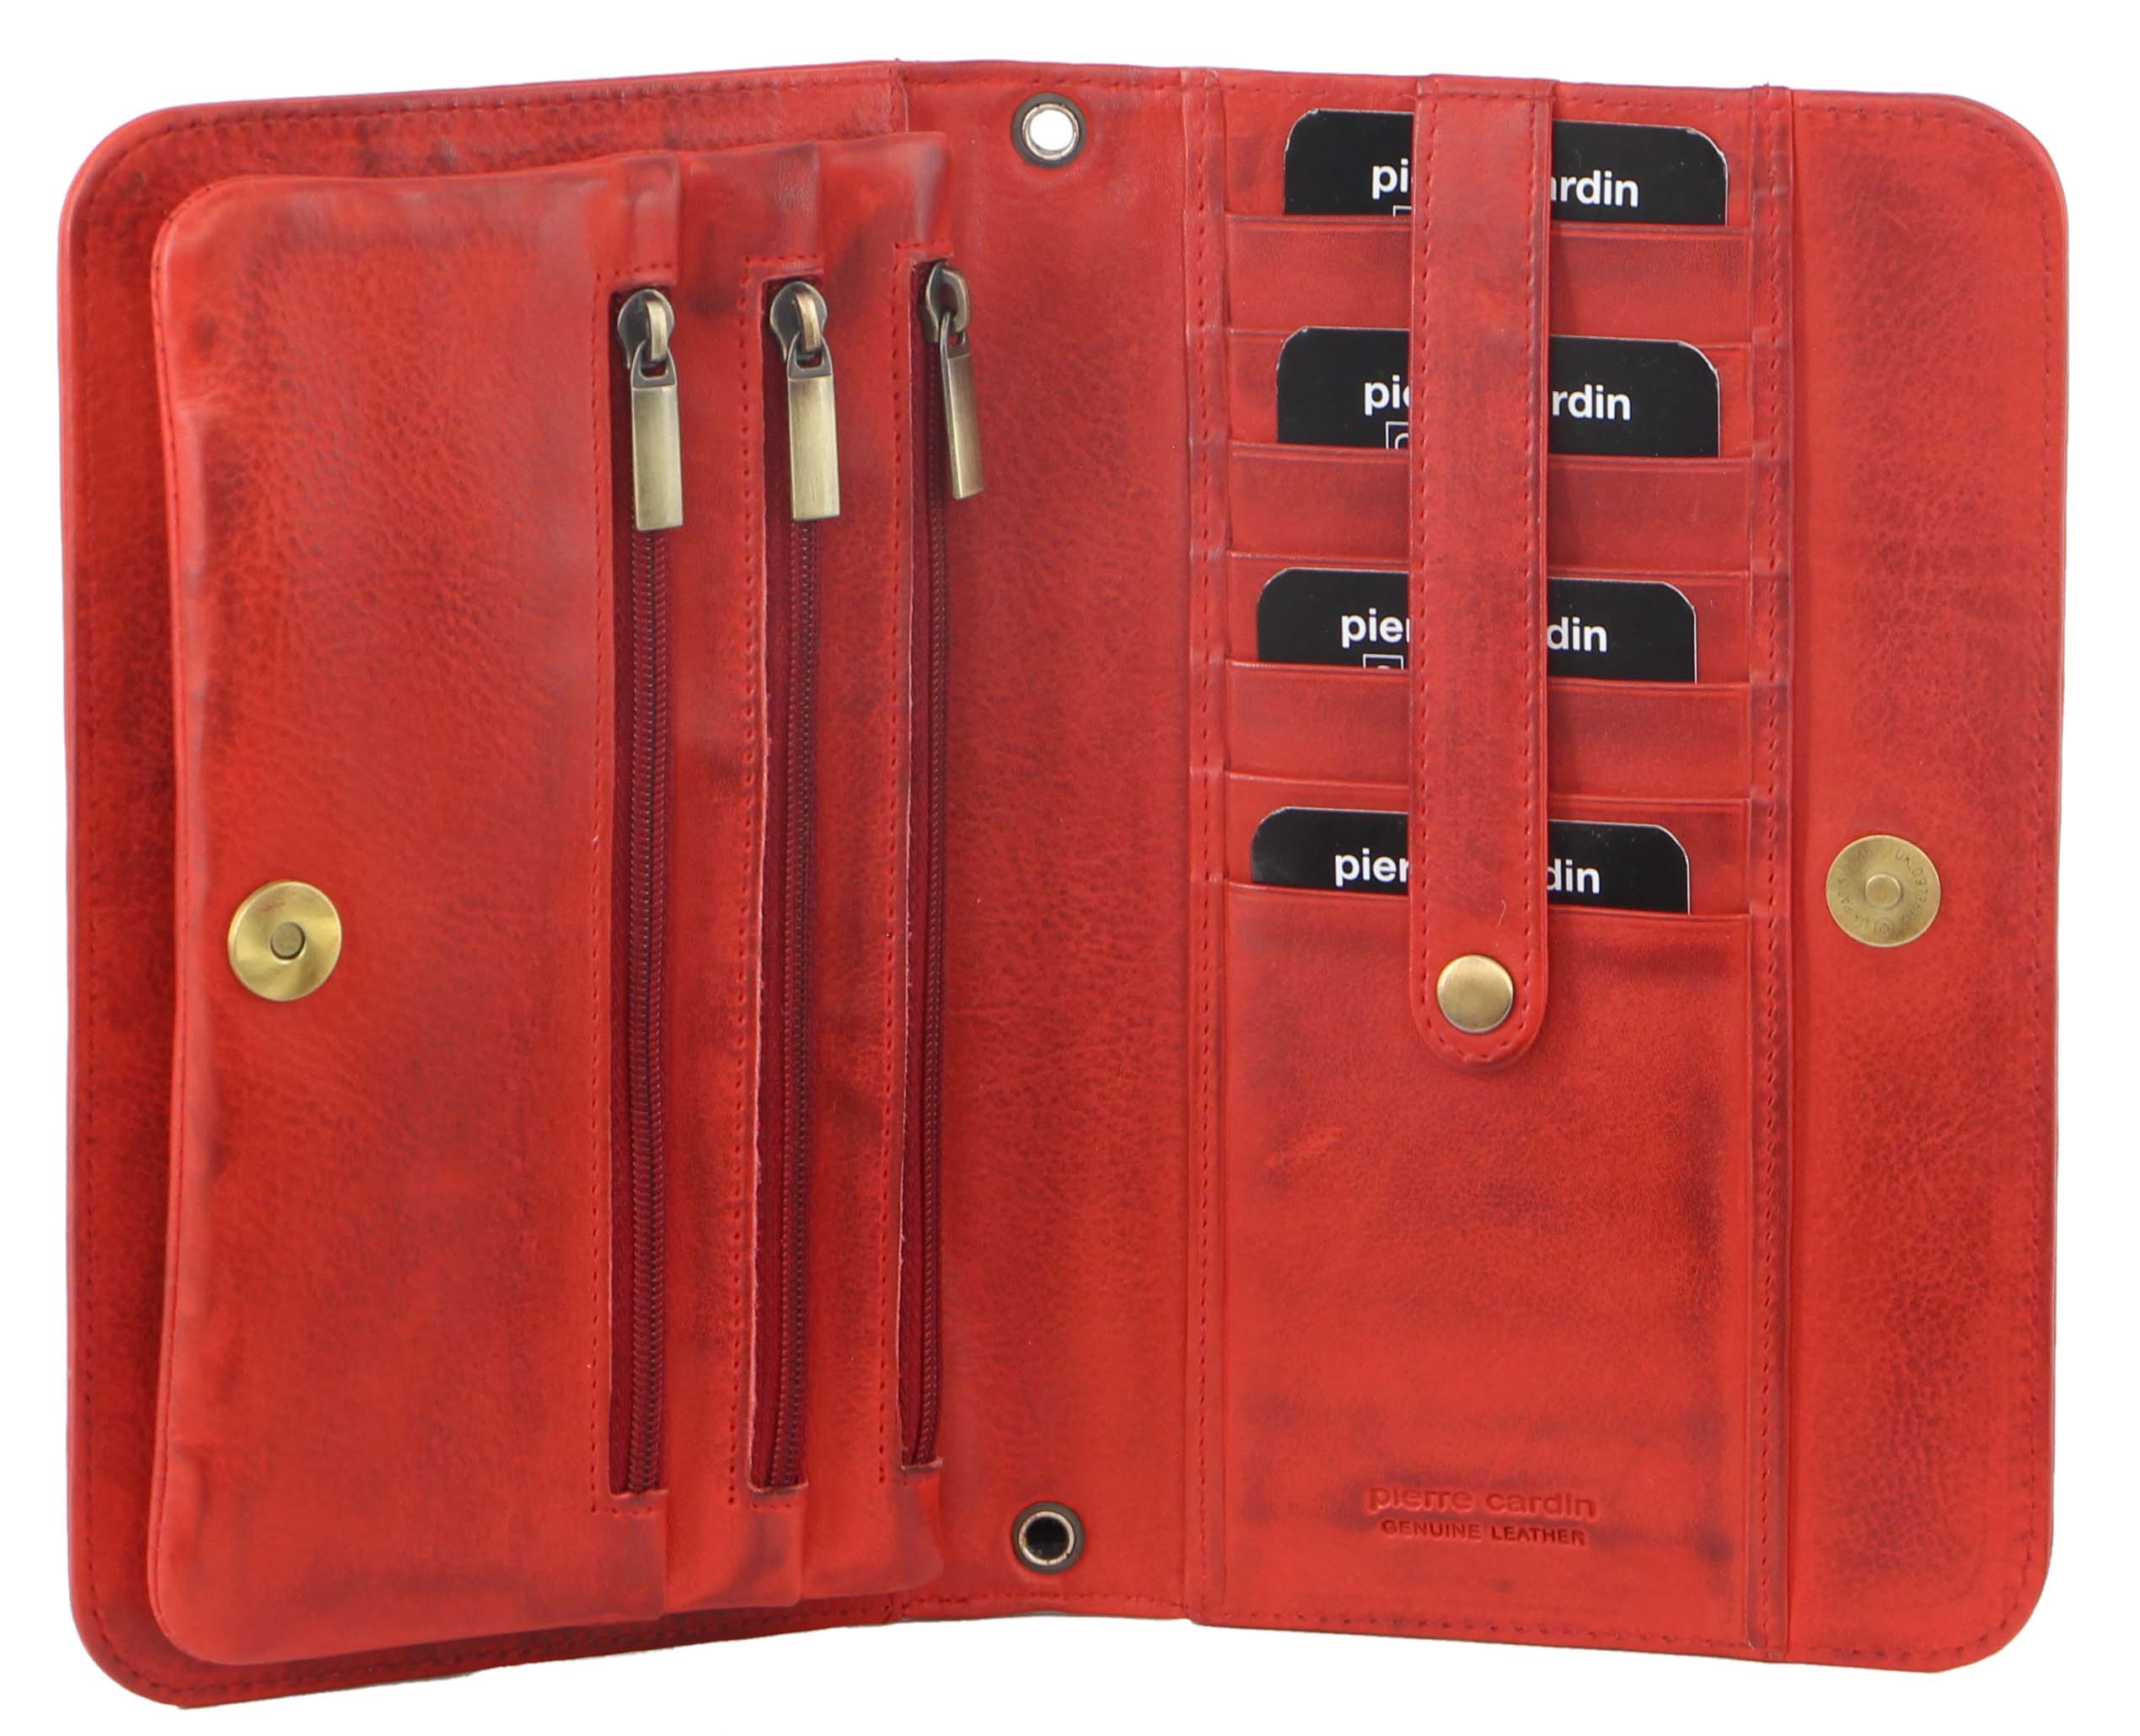 Pierre Cardin Genuine Leather Clutch/Wallet Bag in Red